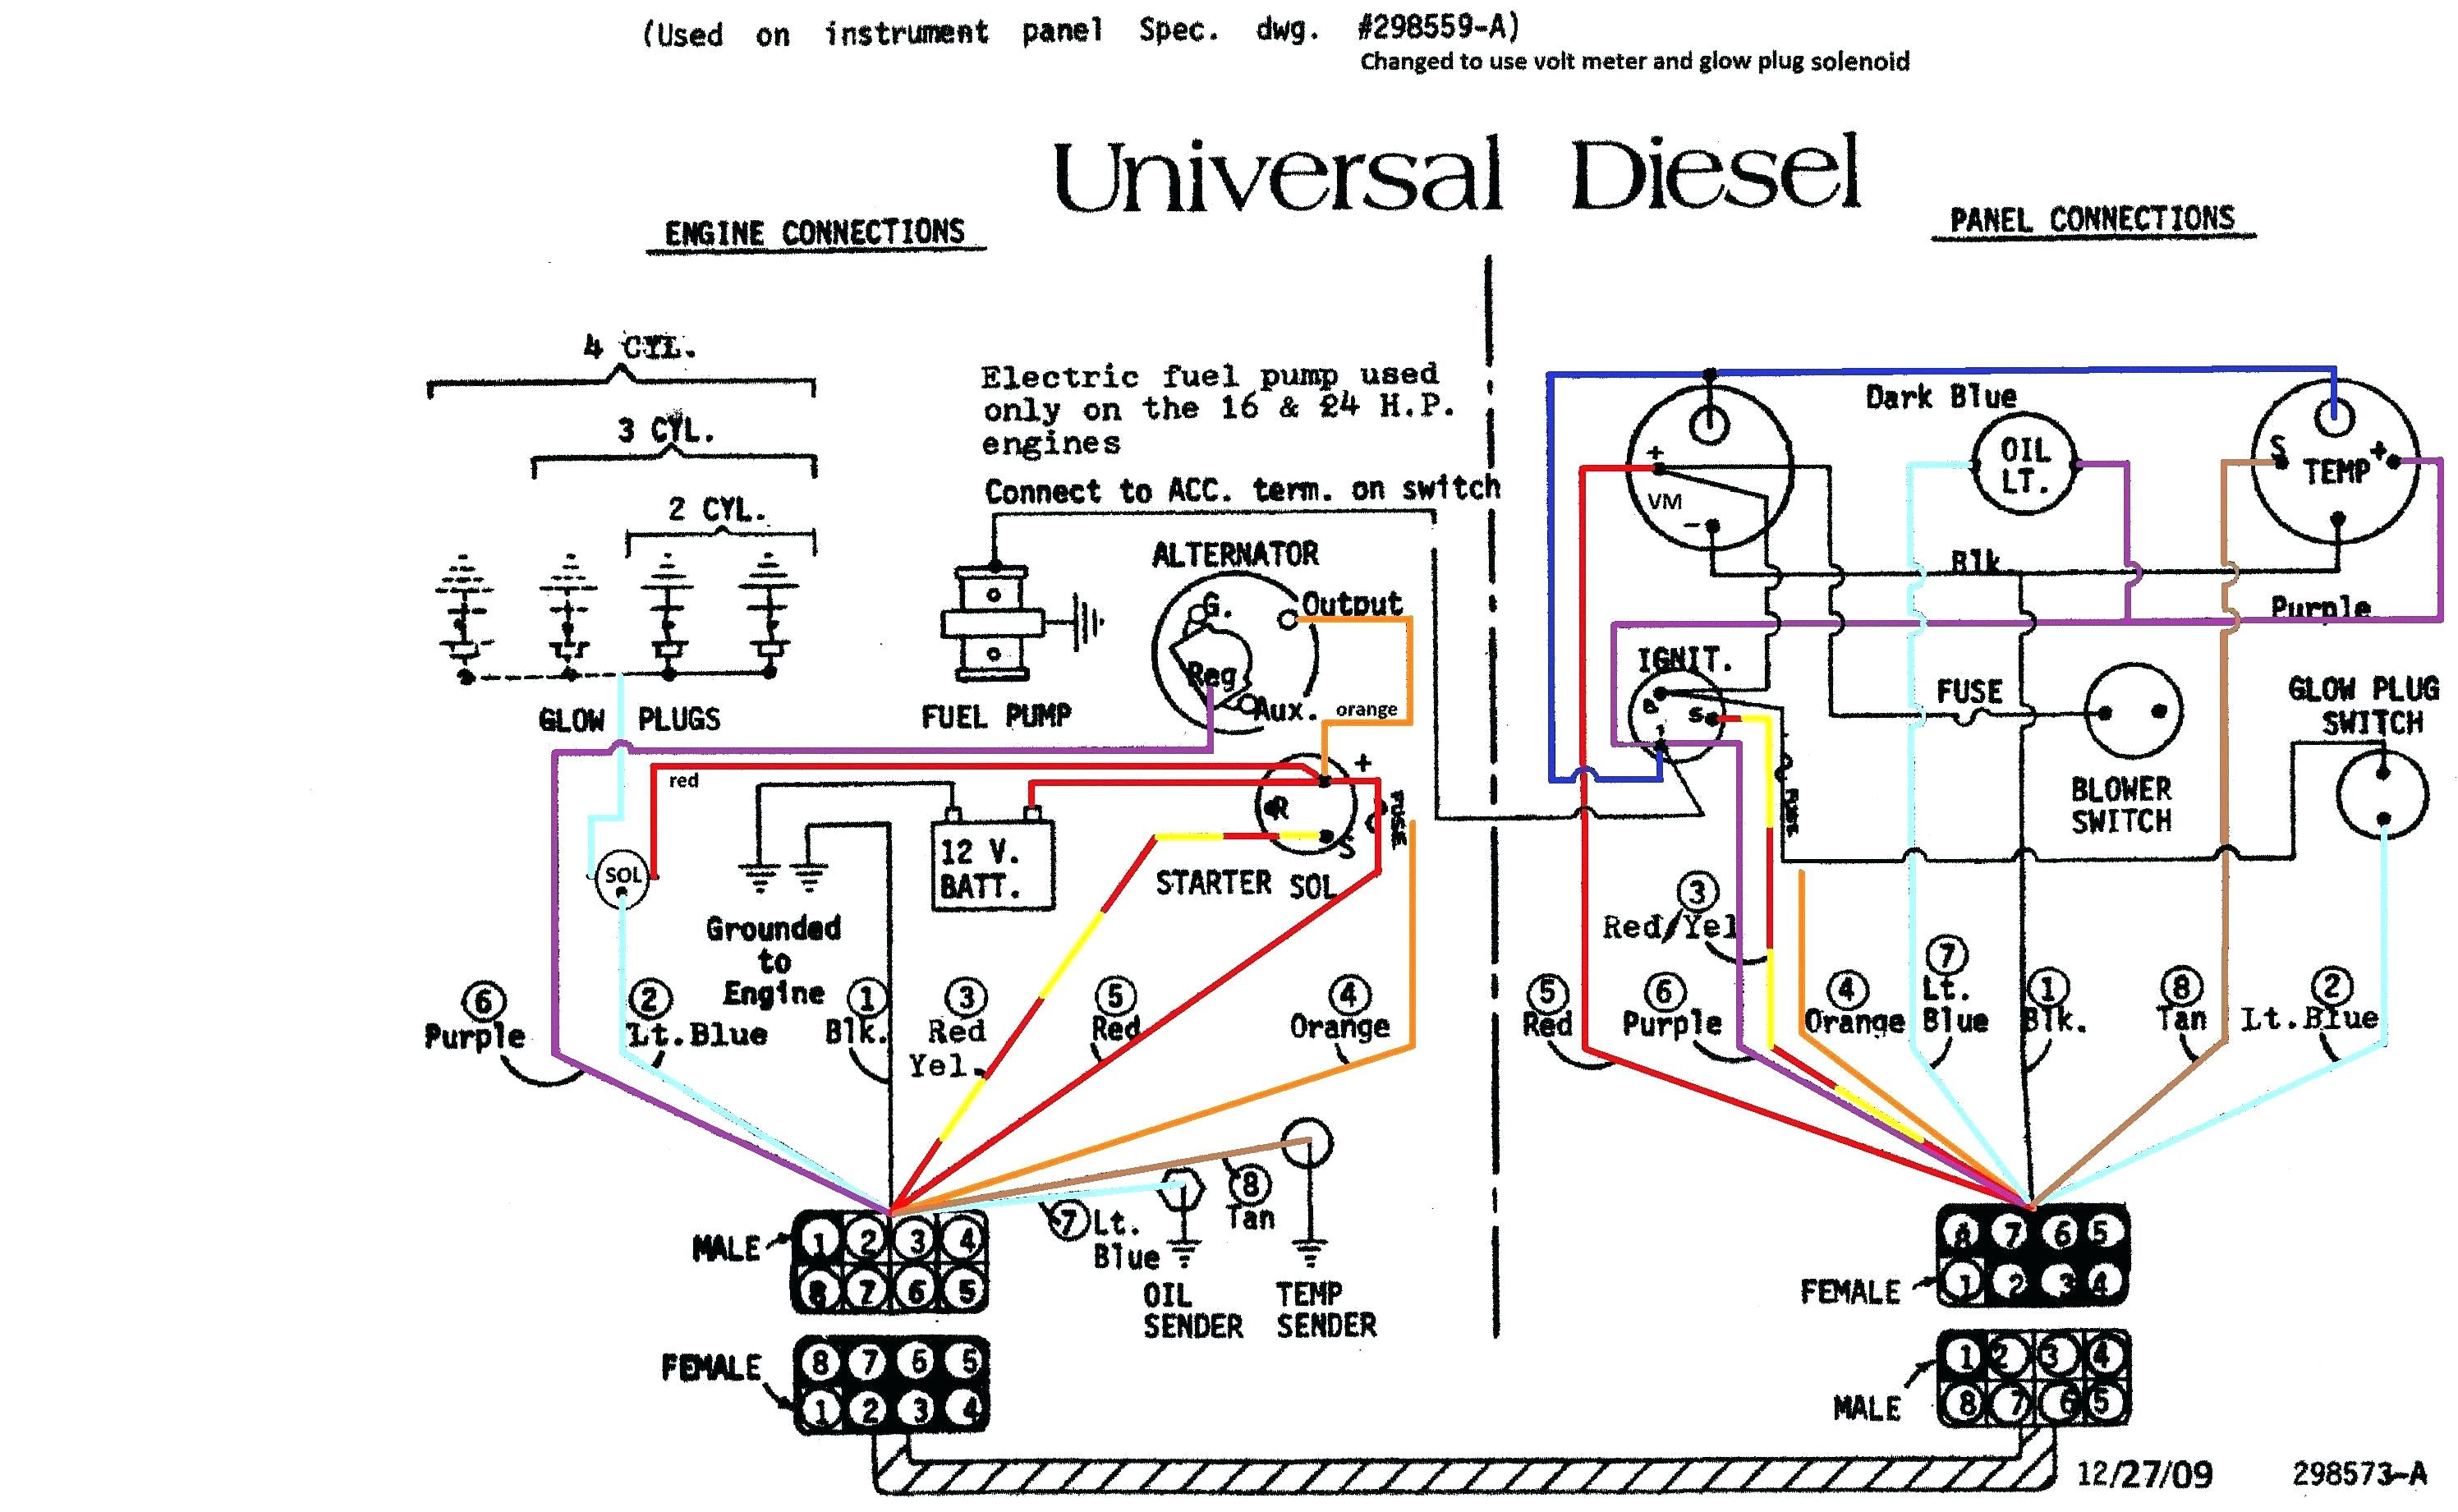 Car Trailer Plug Wiring Diagram Serpentine Belt Diagram Chrysler 300 Wiring Diagram 7 Pin Plug Of Car Trailer Plug Wiring Diagram